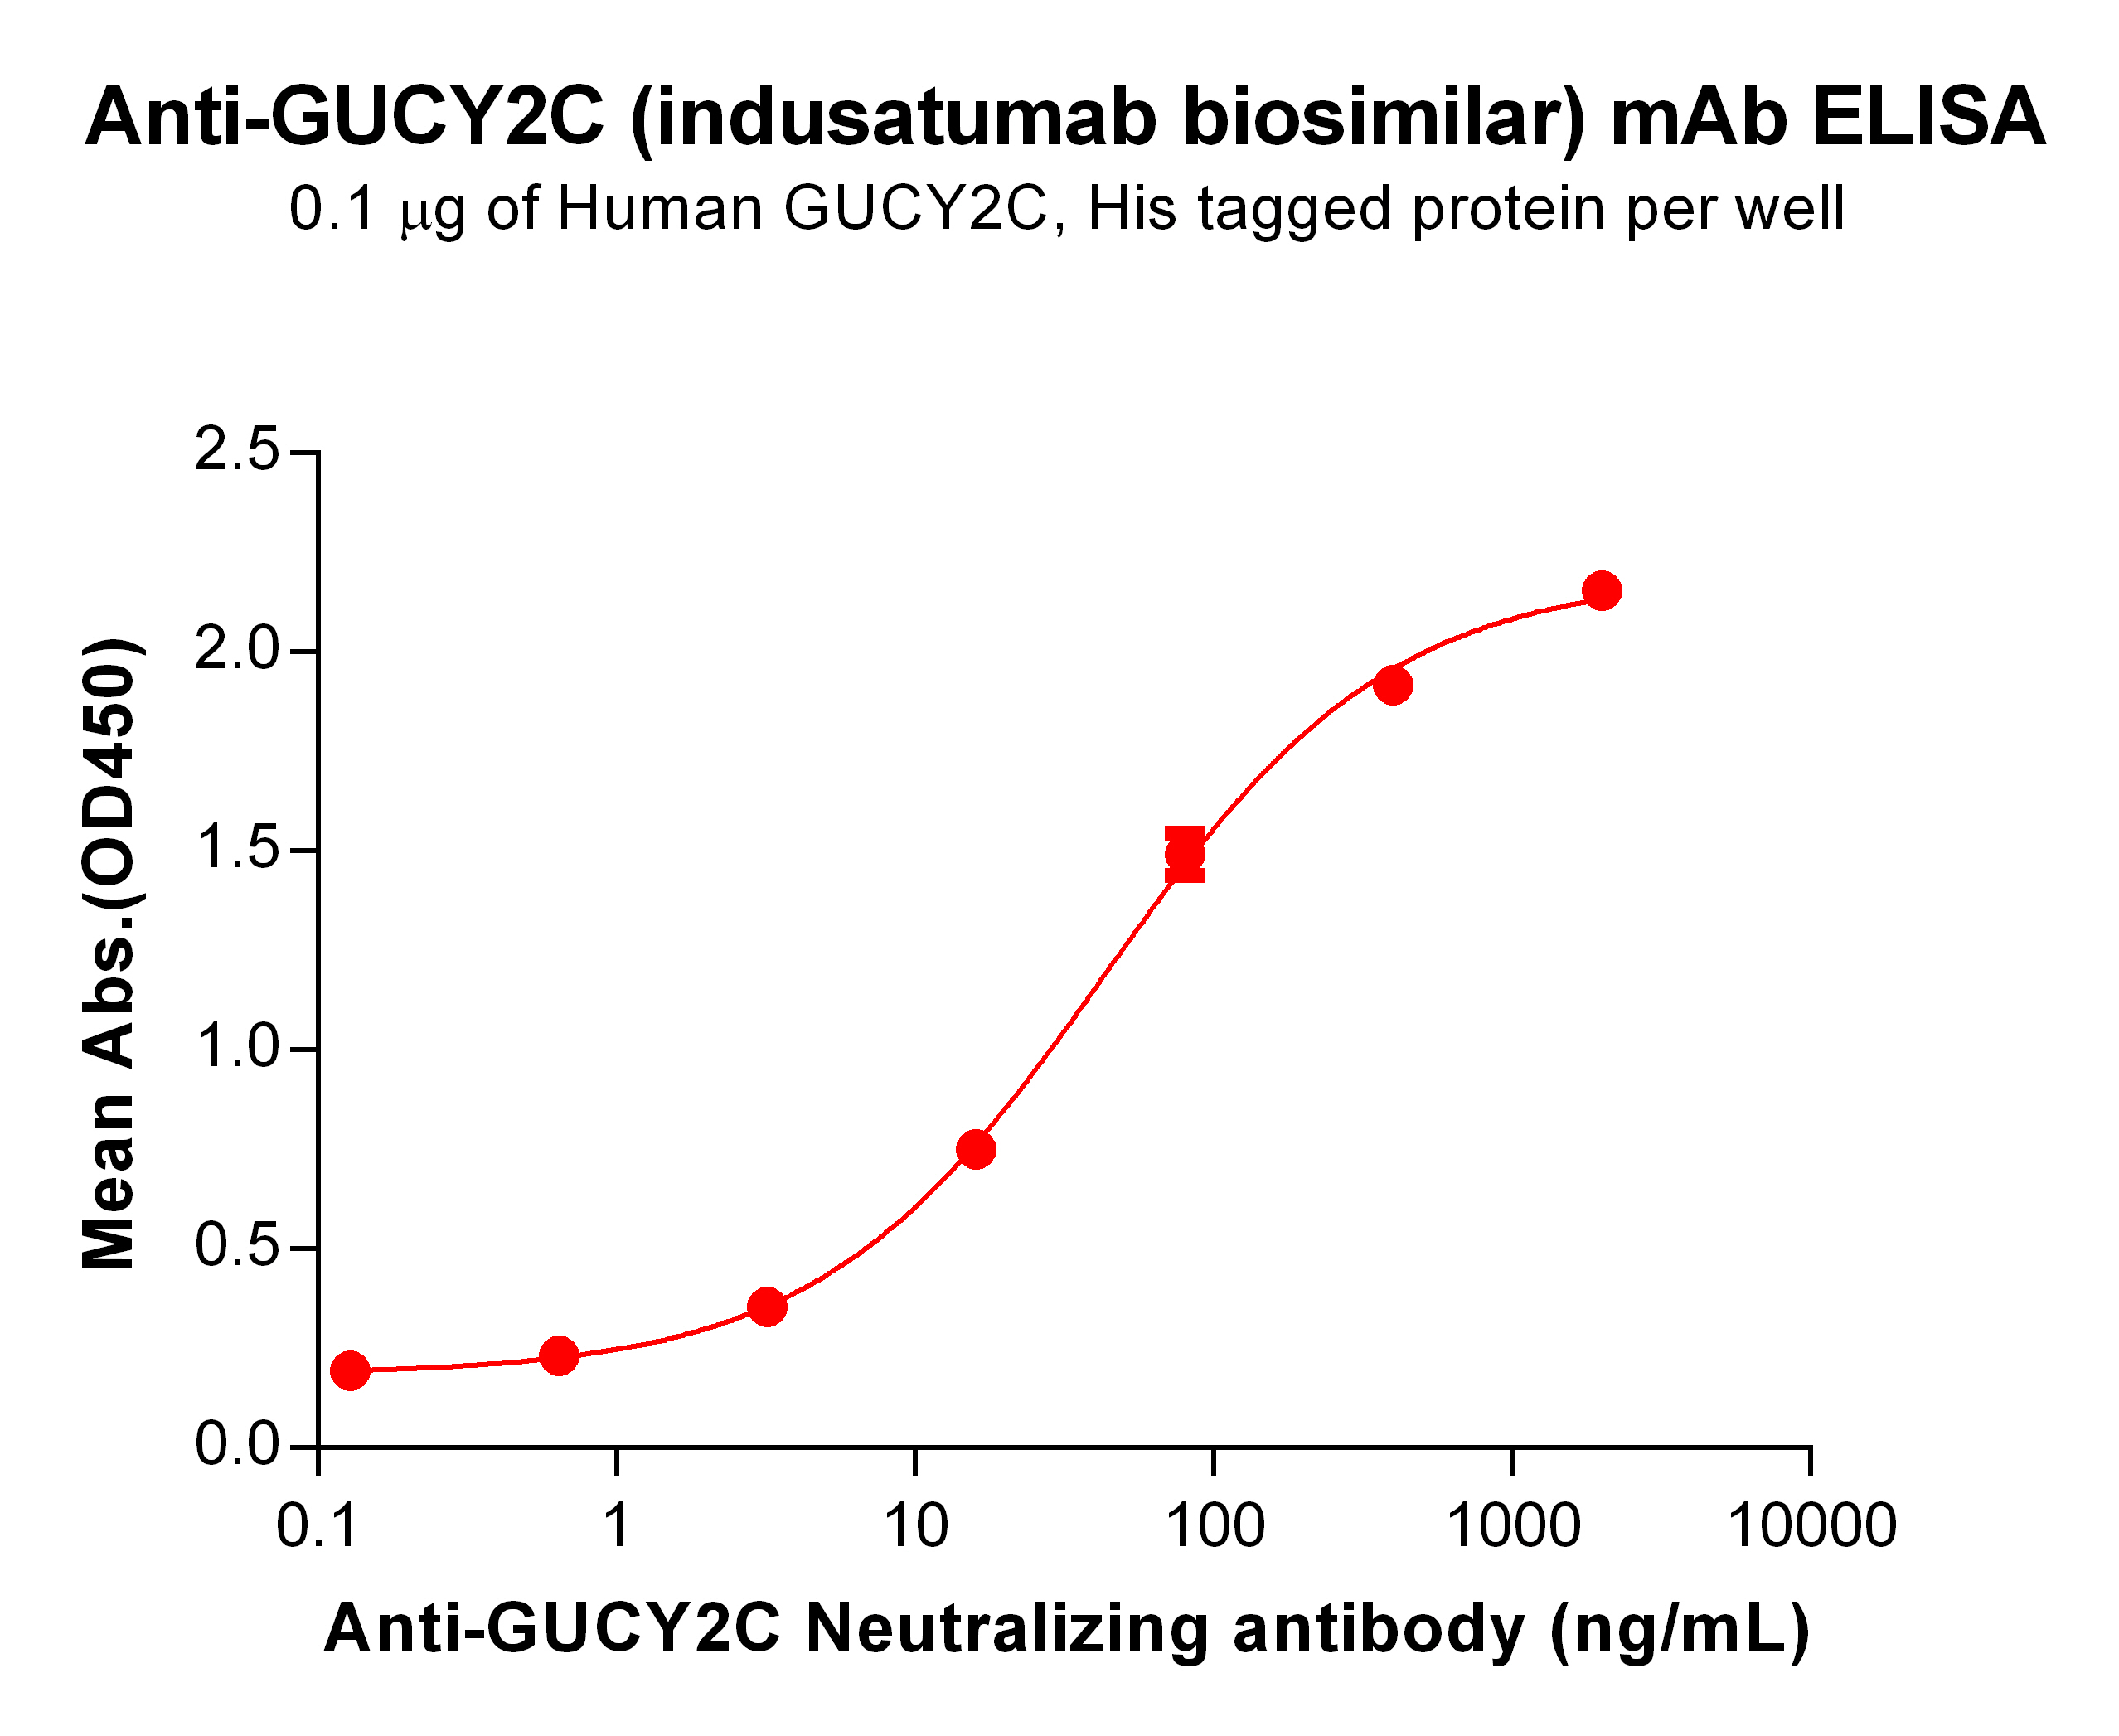 BME100067-Anti-GUCY2C-Neutralizing-antibody-ELISA-Fig2.jpg